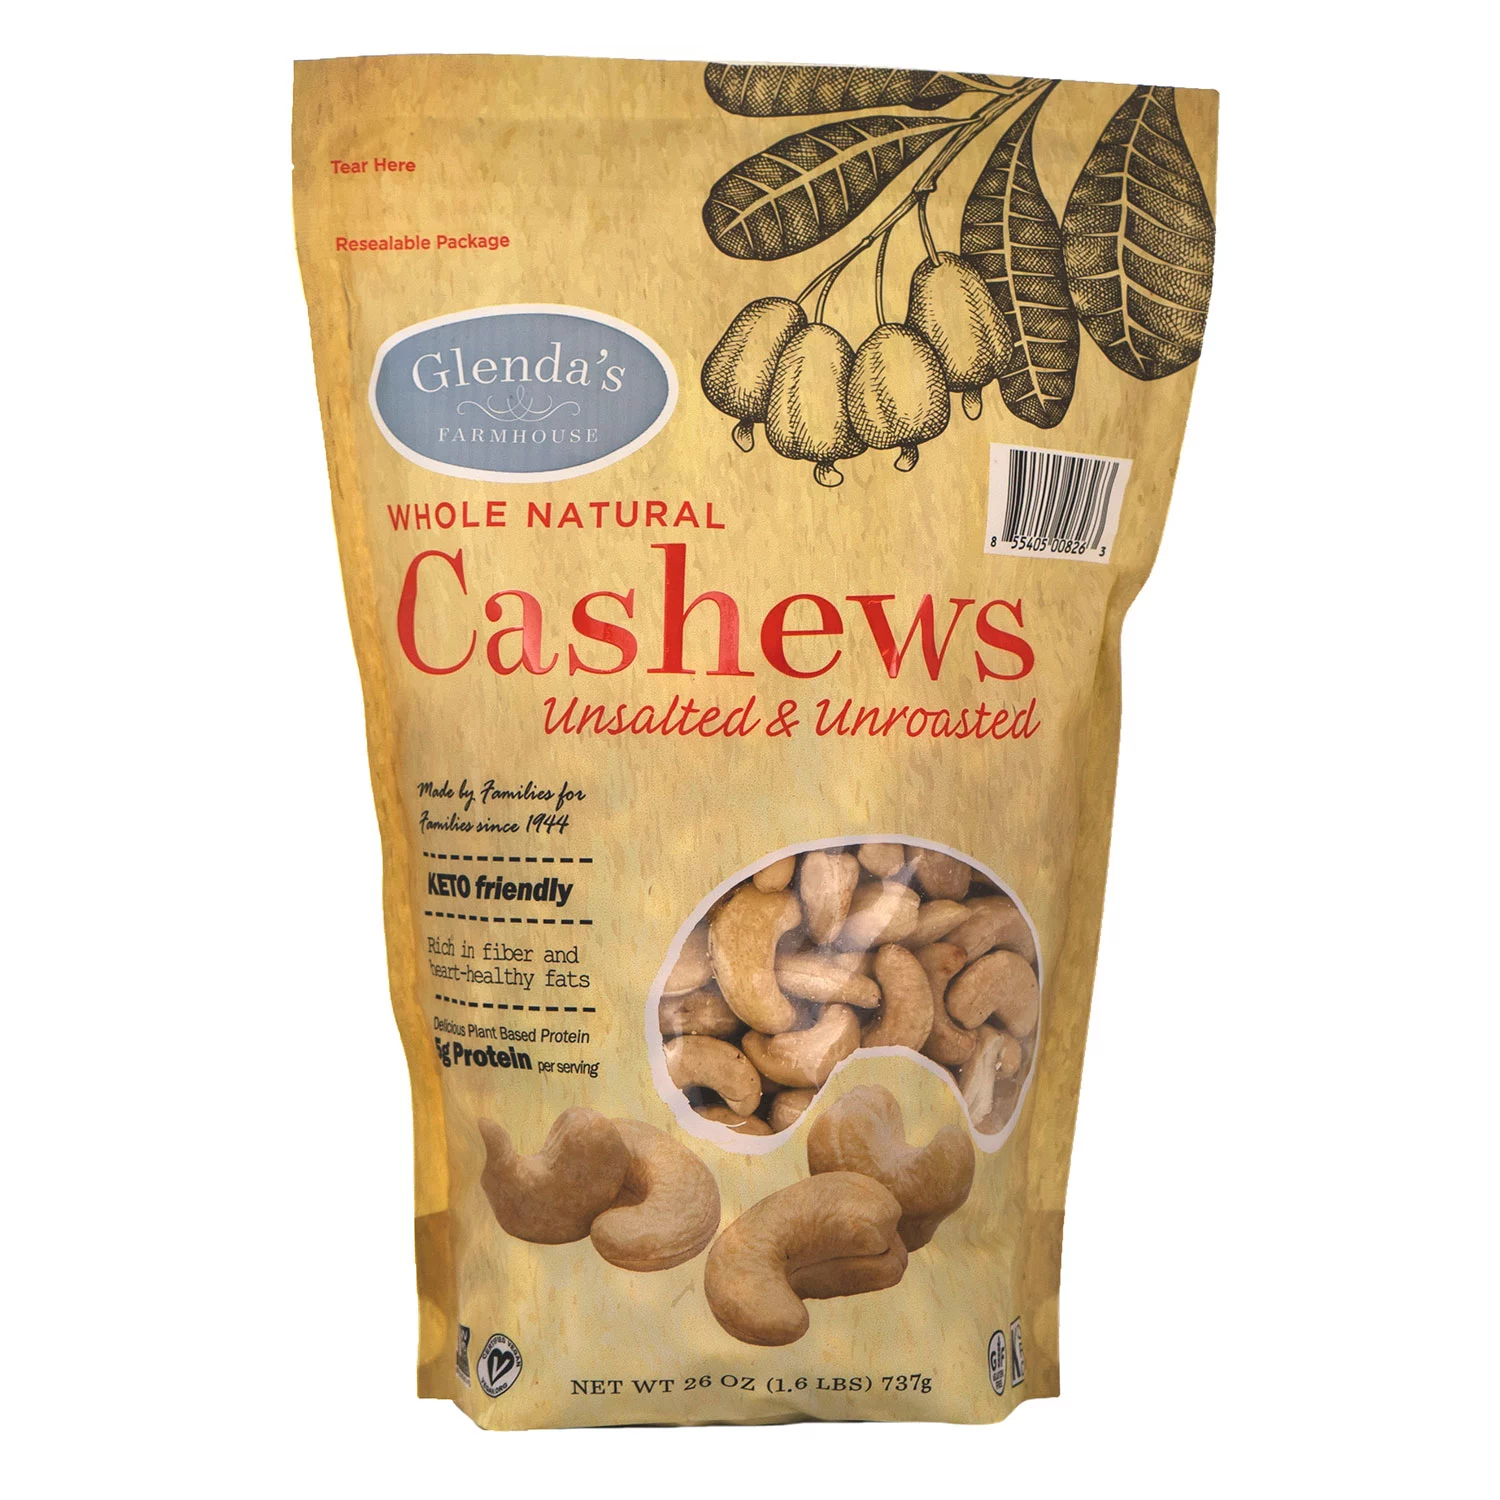 Glenda’s Farmhouse Whole Natural Unsalted/Unroasted Cashews (26 oz.)